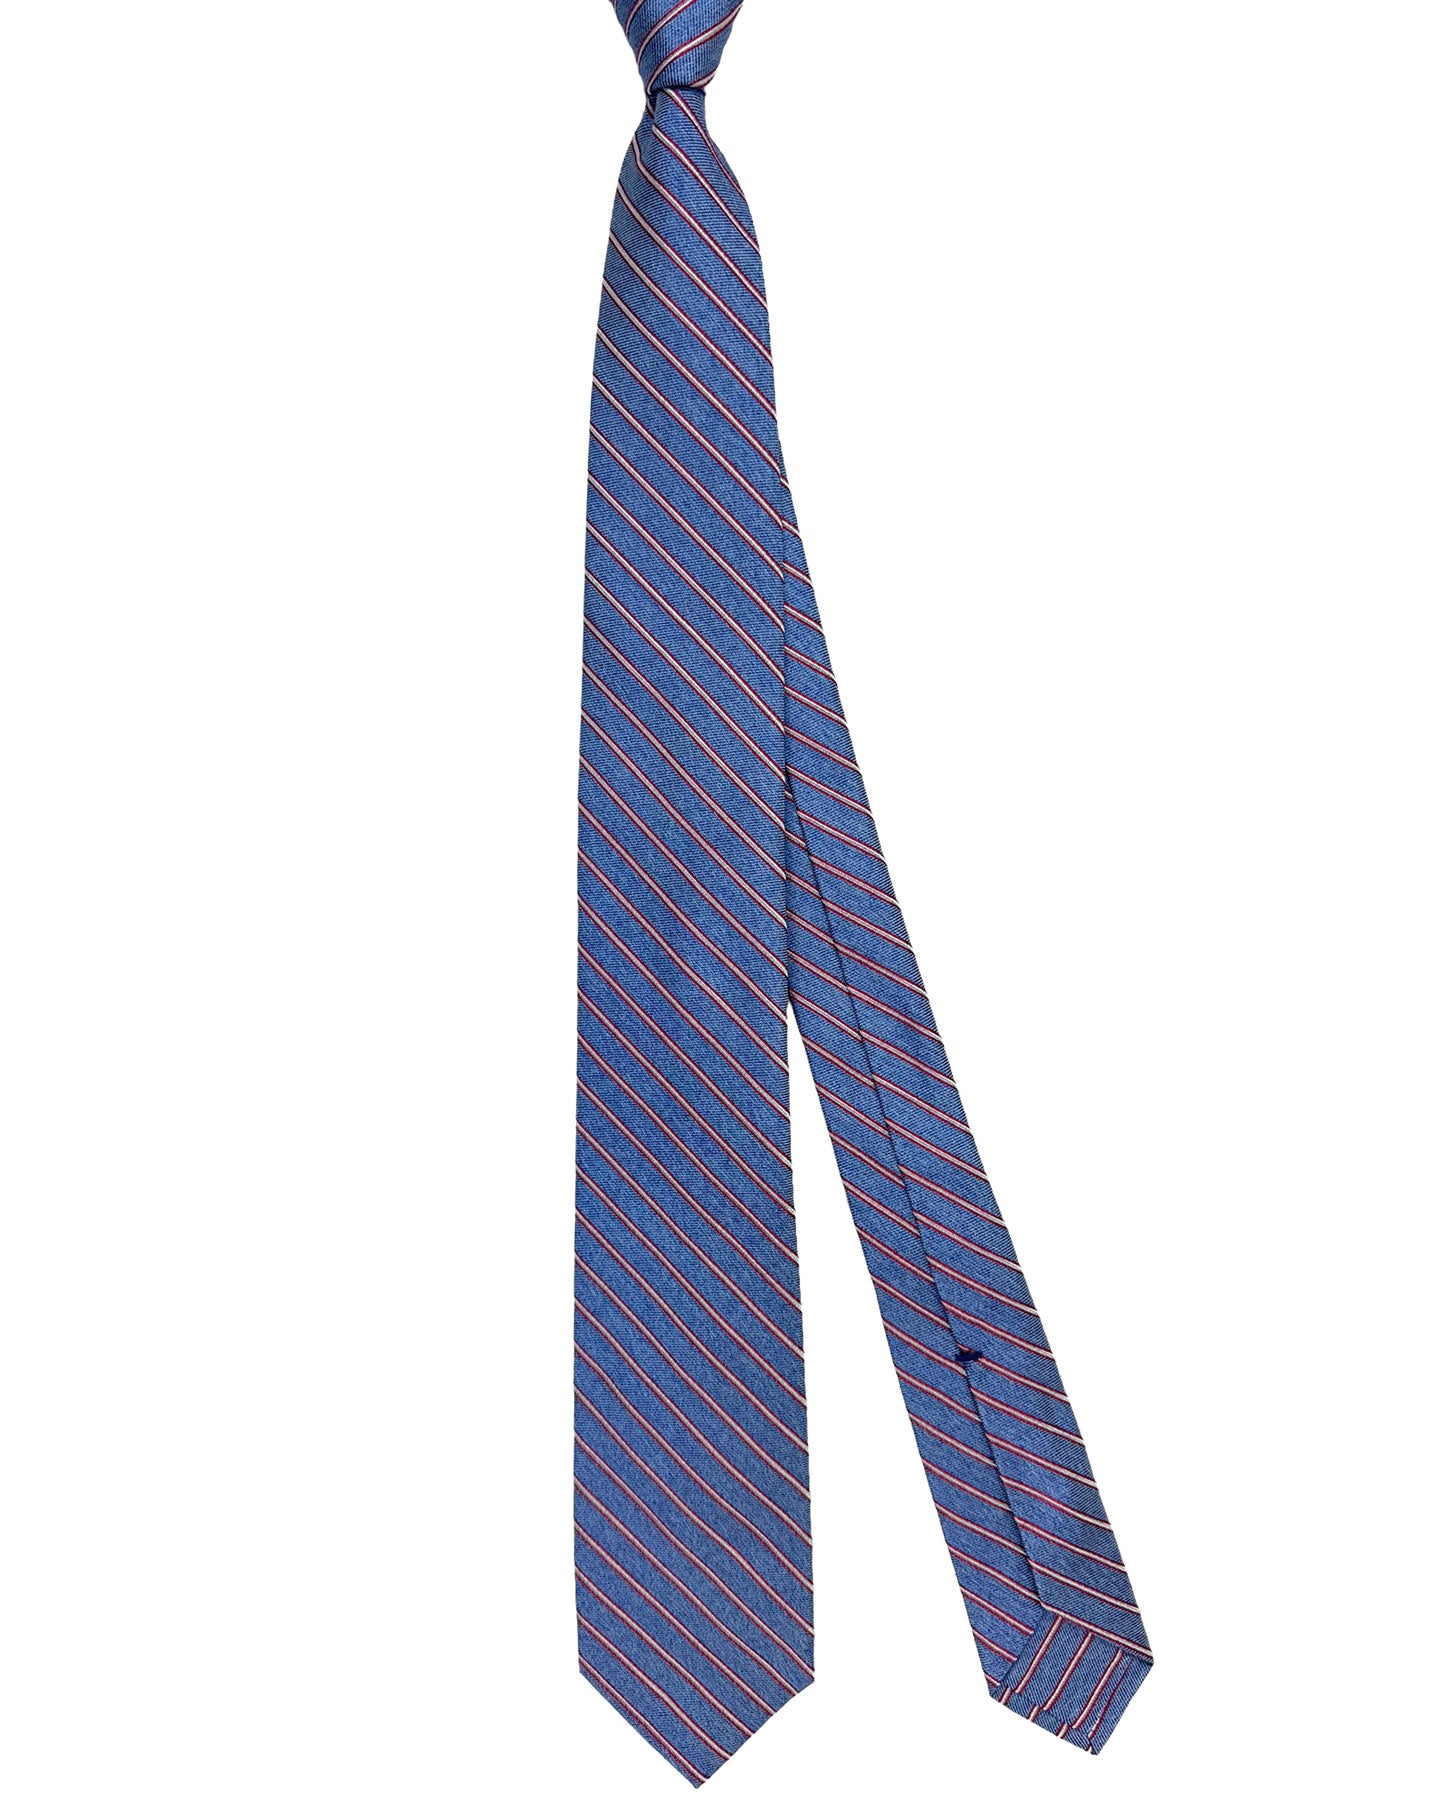 Barba Sevenfold Tie Royal Blue Silver Red Stripes Design - Sartorial Neckwear